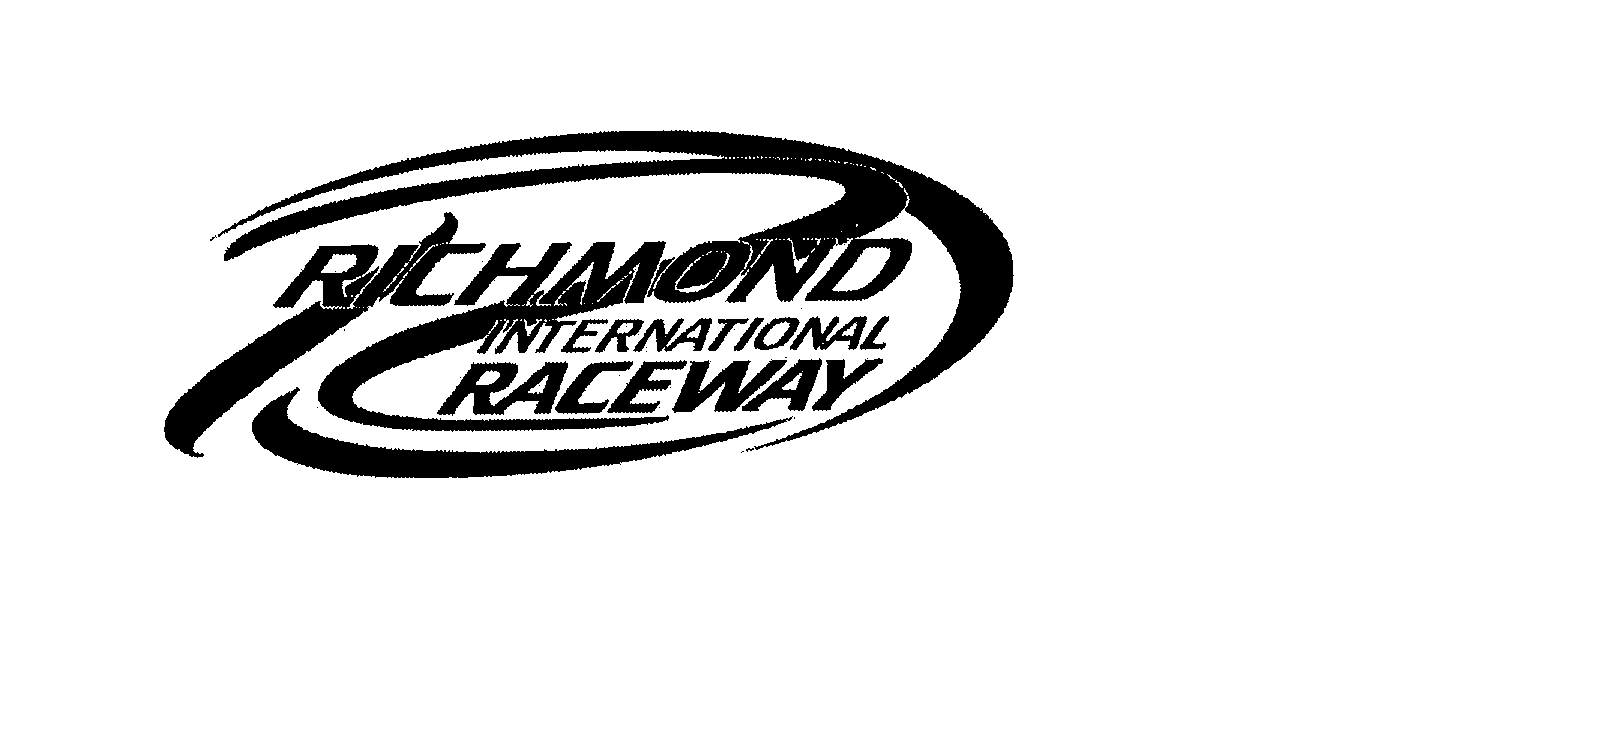  R RICHMOND INTERNATIONAL RACEWAY